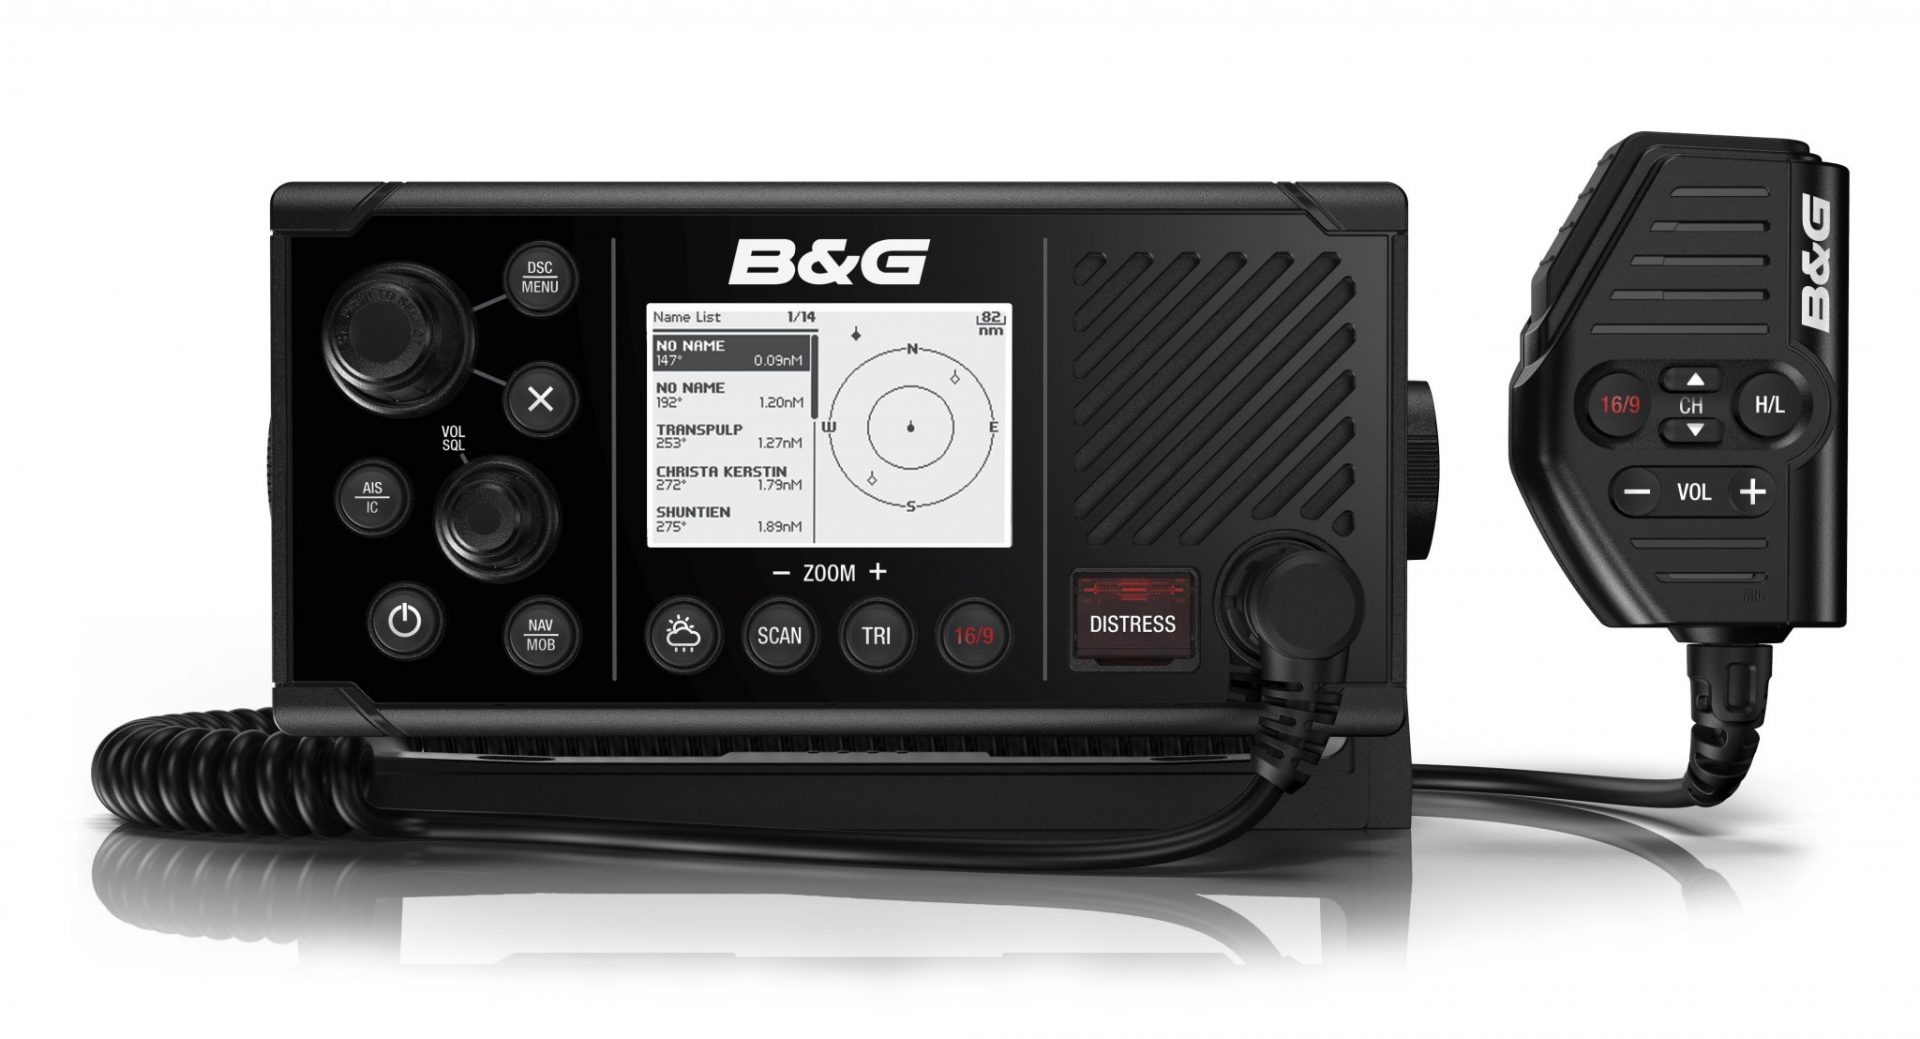 La nuova radio Vhf di B&G V60-B